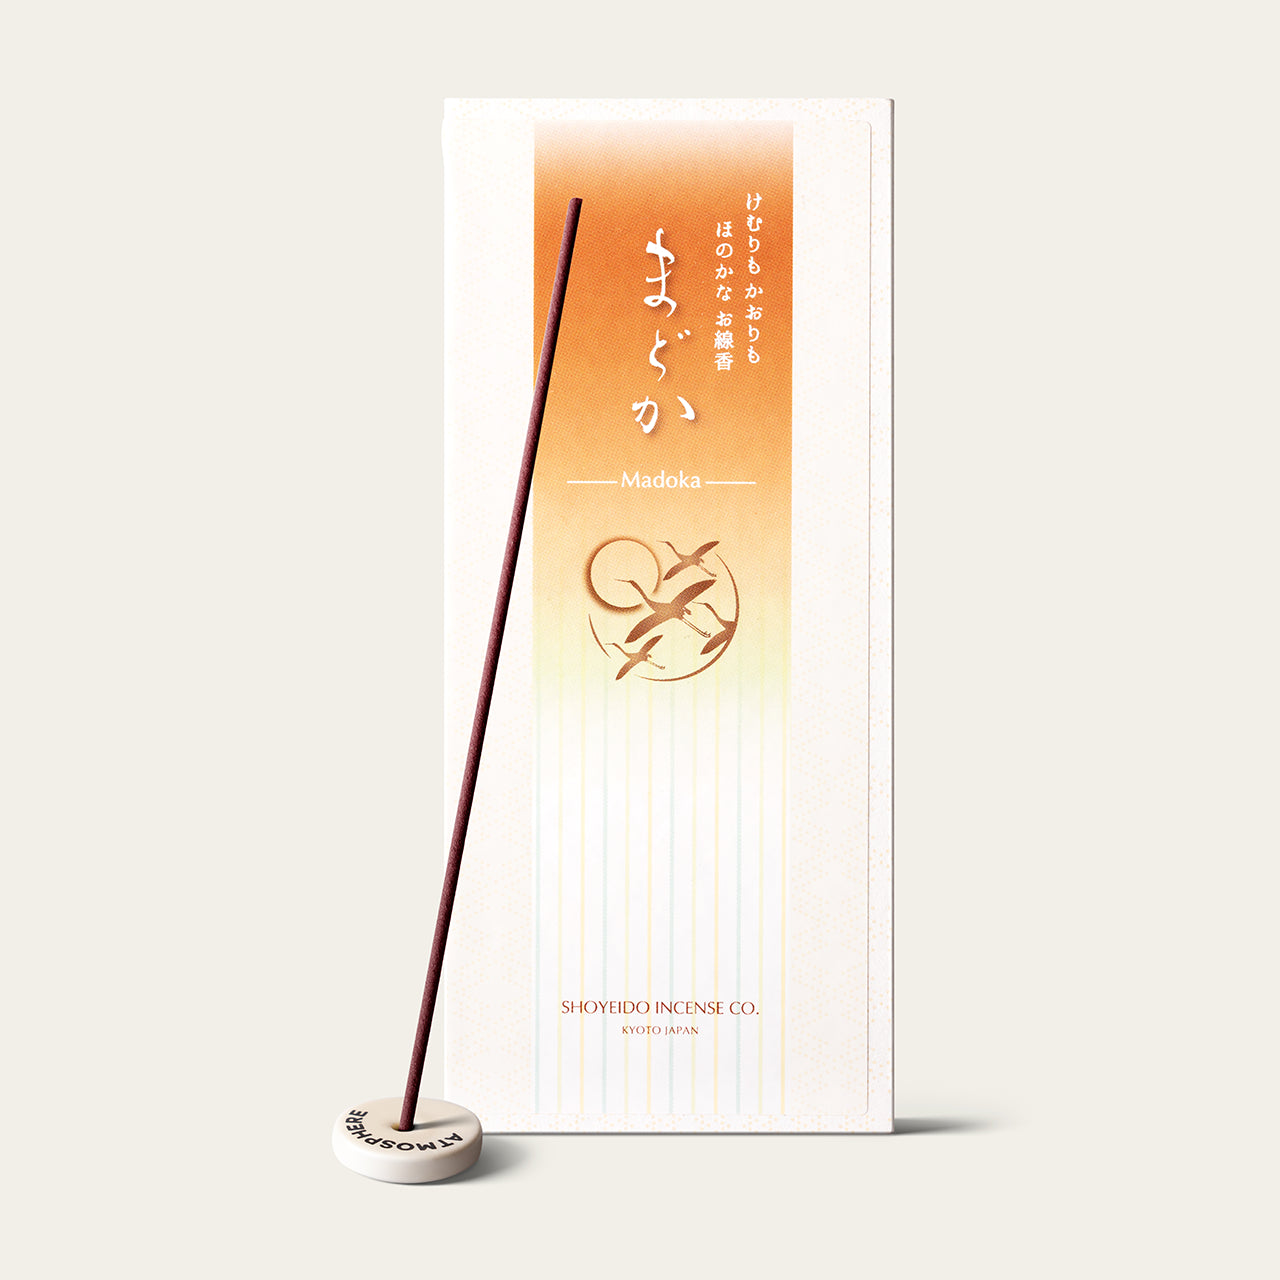 Shoyeido Low Smoke Chiffon Madoka Japanese incense sticks (165 sticks) with Atmosphere ceramic incense holder